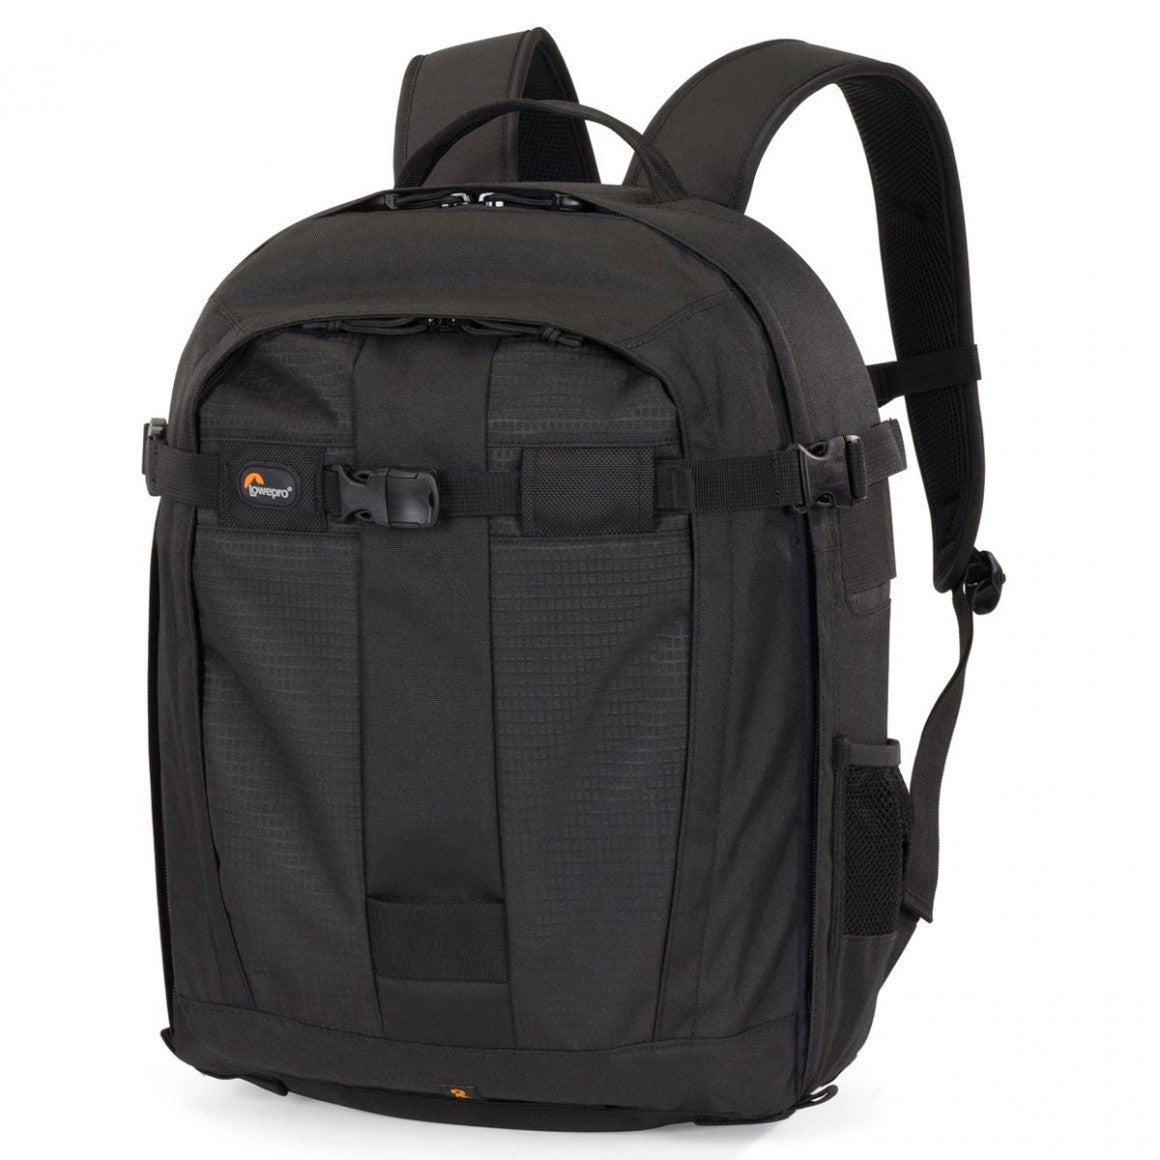 Lowepro Pro Runner 300 AW Camera Backpack (Black), bags backpacks, Lowepro - Pictureline  - 1